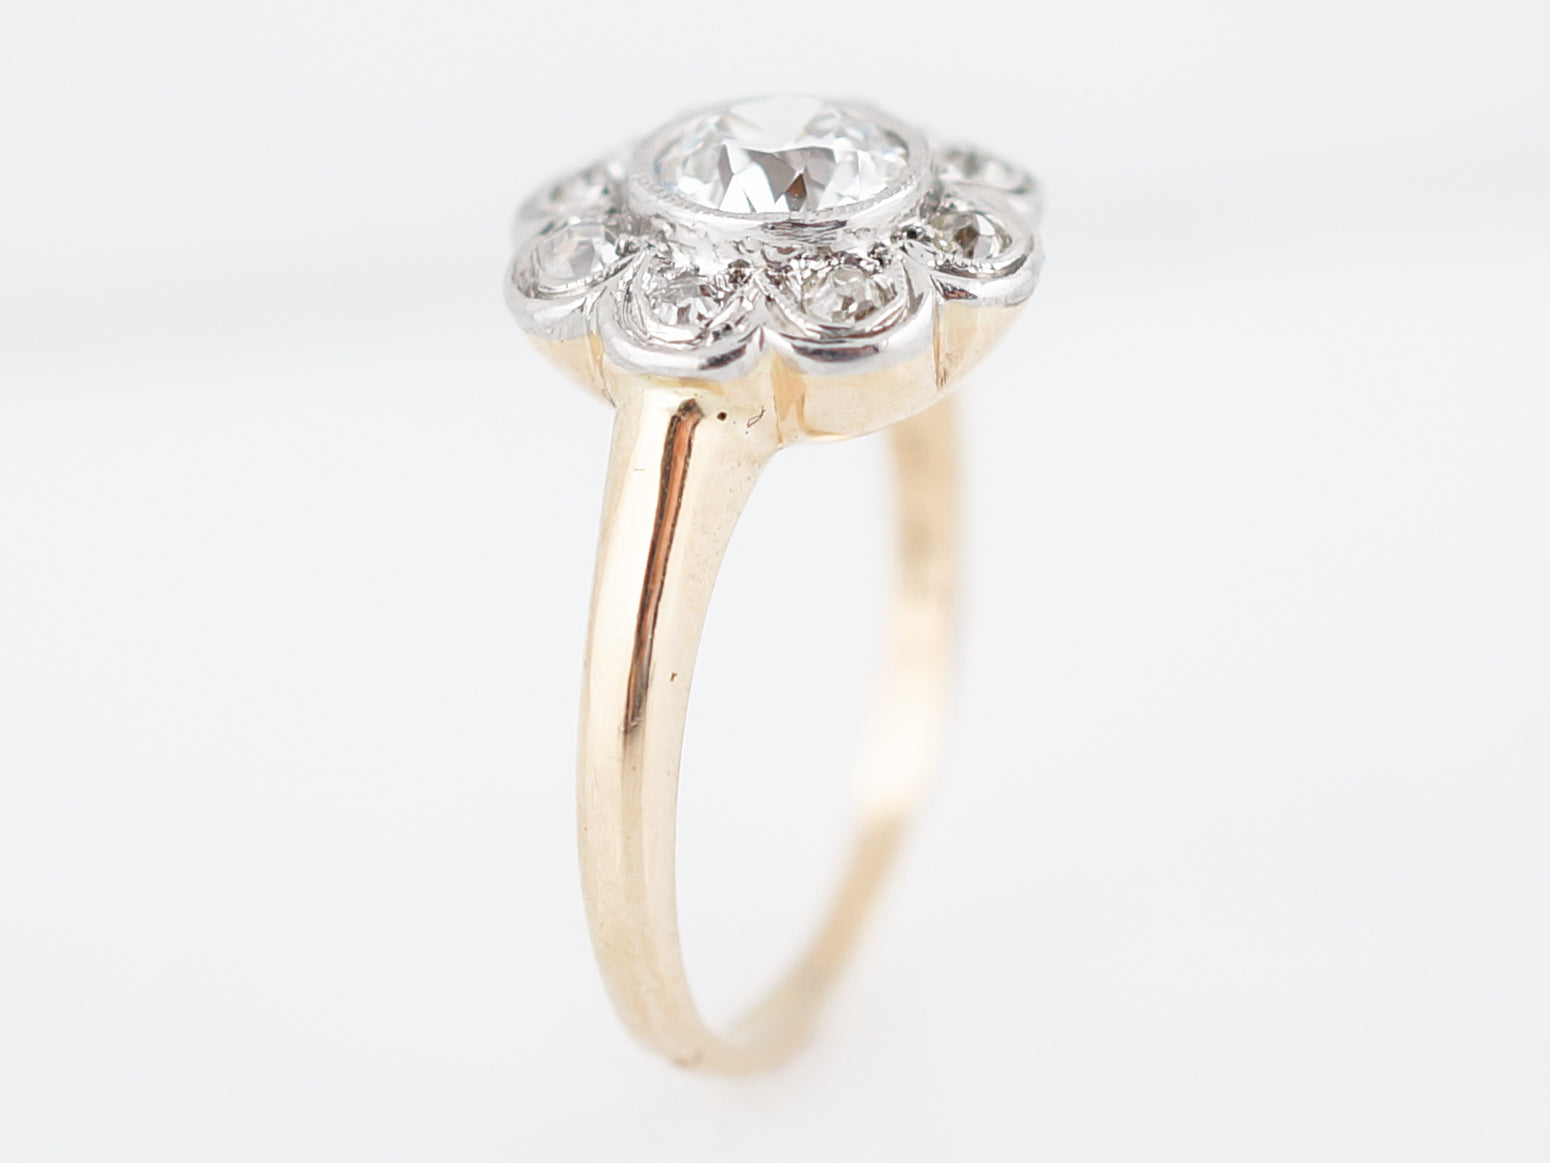 Antique Engagement Ring Victorian .58 Old European Cut Diamond in 14K Yellow Gold & Platinum